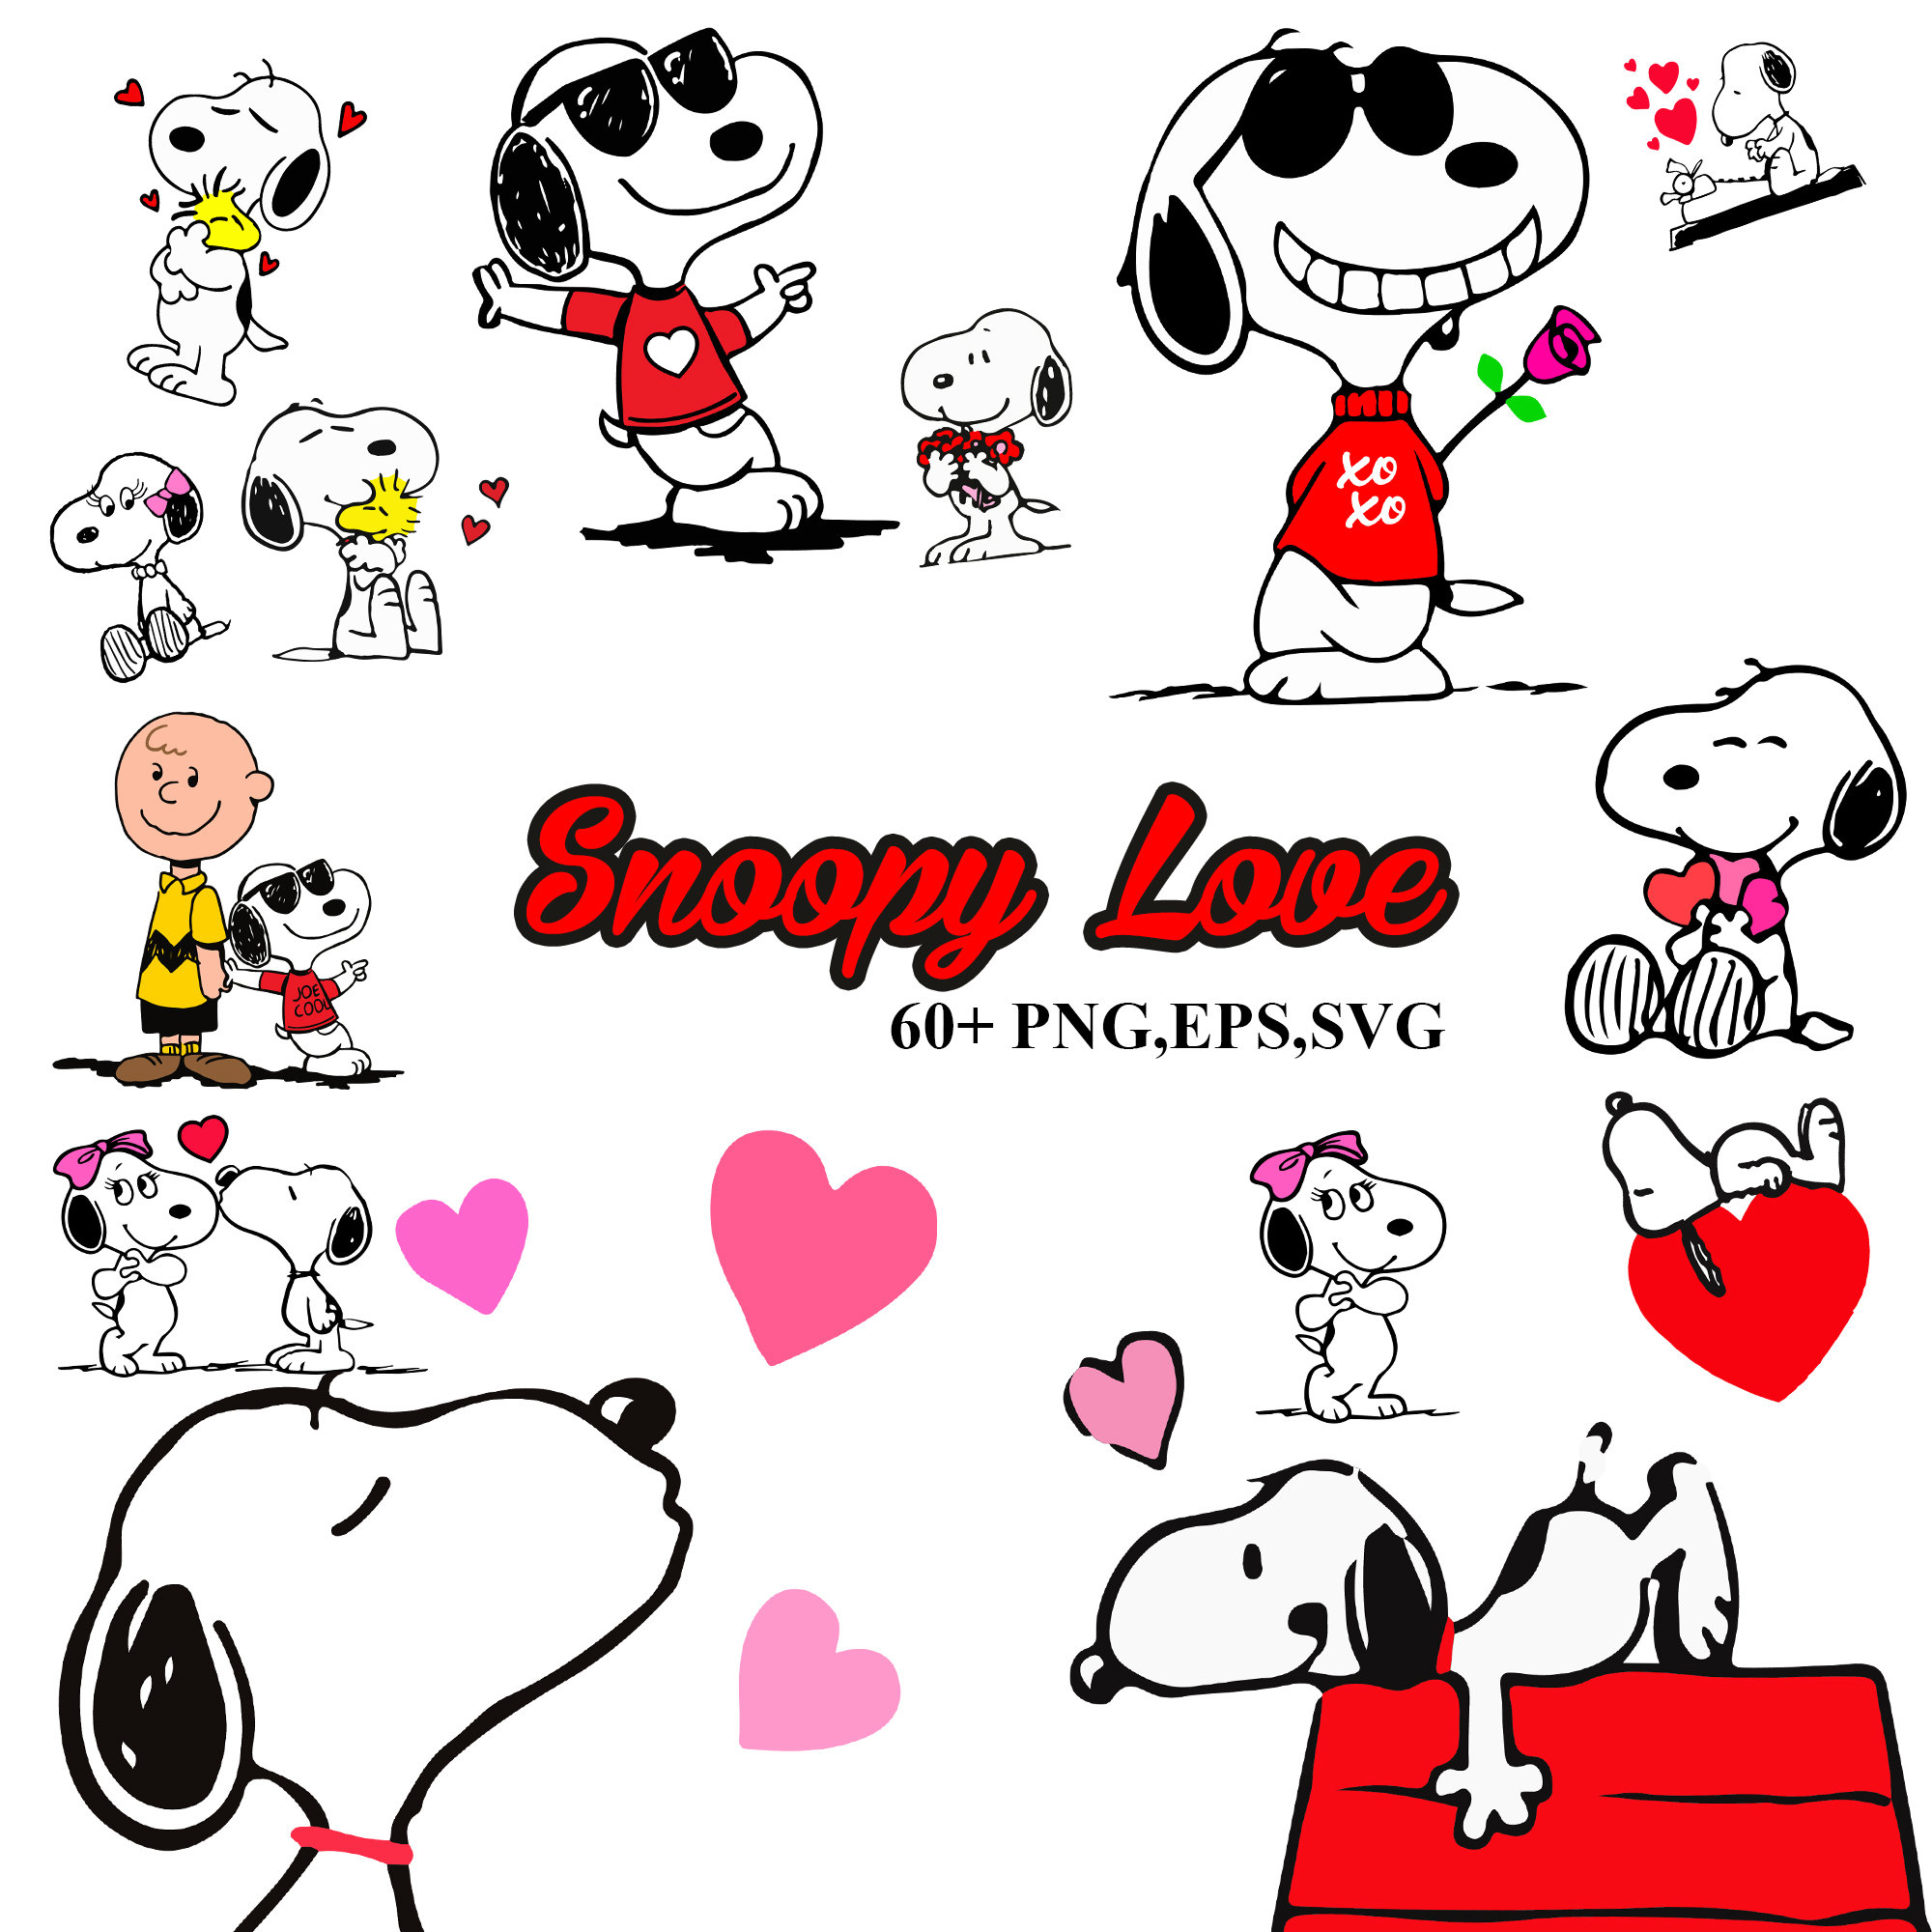 3P4 x Peanuts® Valentine Sticker Set - Snoopy & Woodstock Puffy Coats